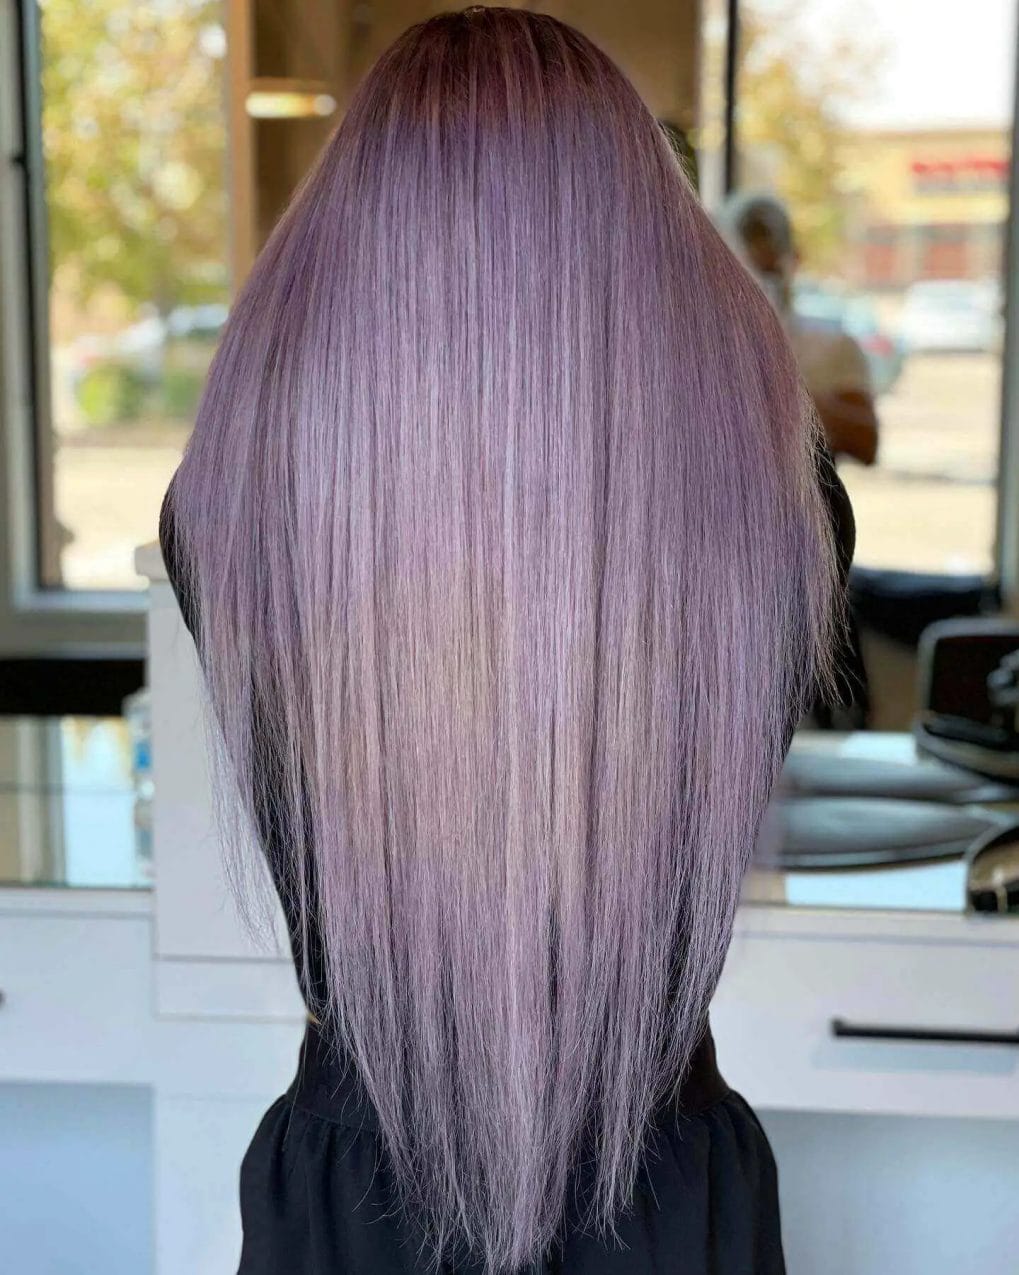 Vivid lavender to silver balayage on straight, long layered hair.